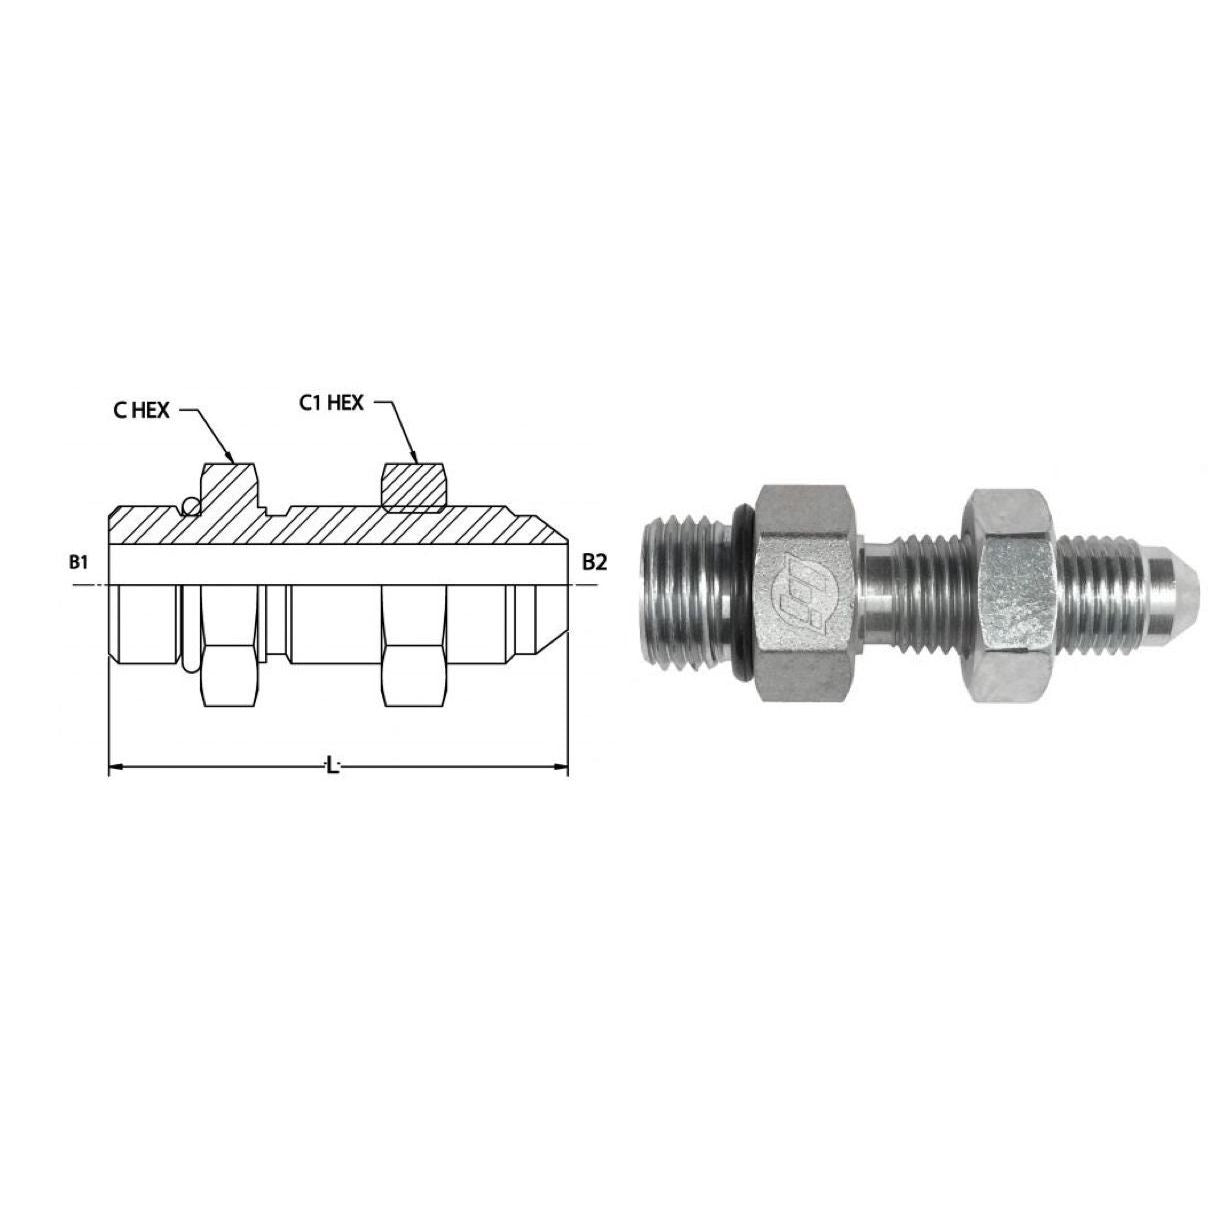 2764-LN-06-06-O : OneHydraulics Bulkhead Straight Adapter with Lock Nut, 0.375 (3/8) Male ORB x 0.375 (3/8) Male JIC, Steel